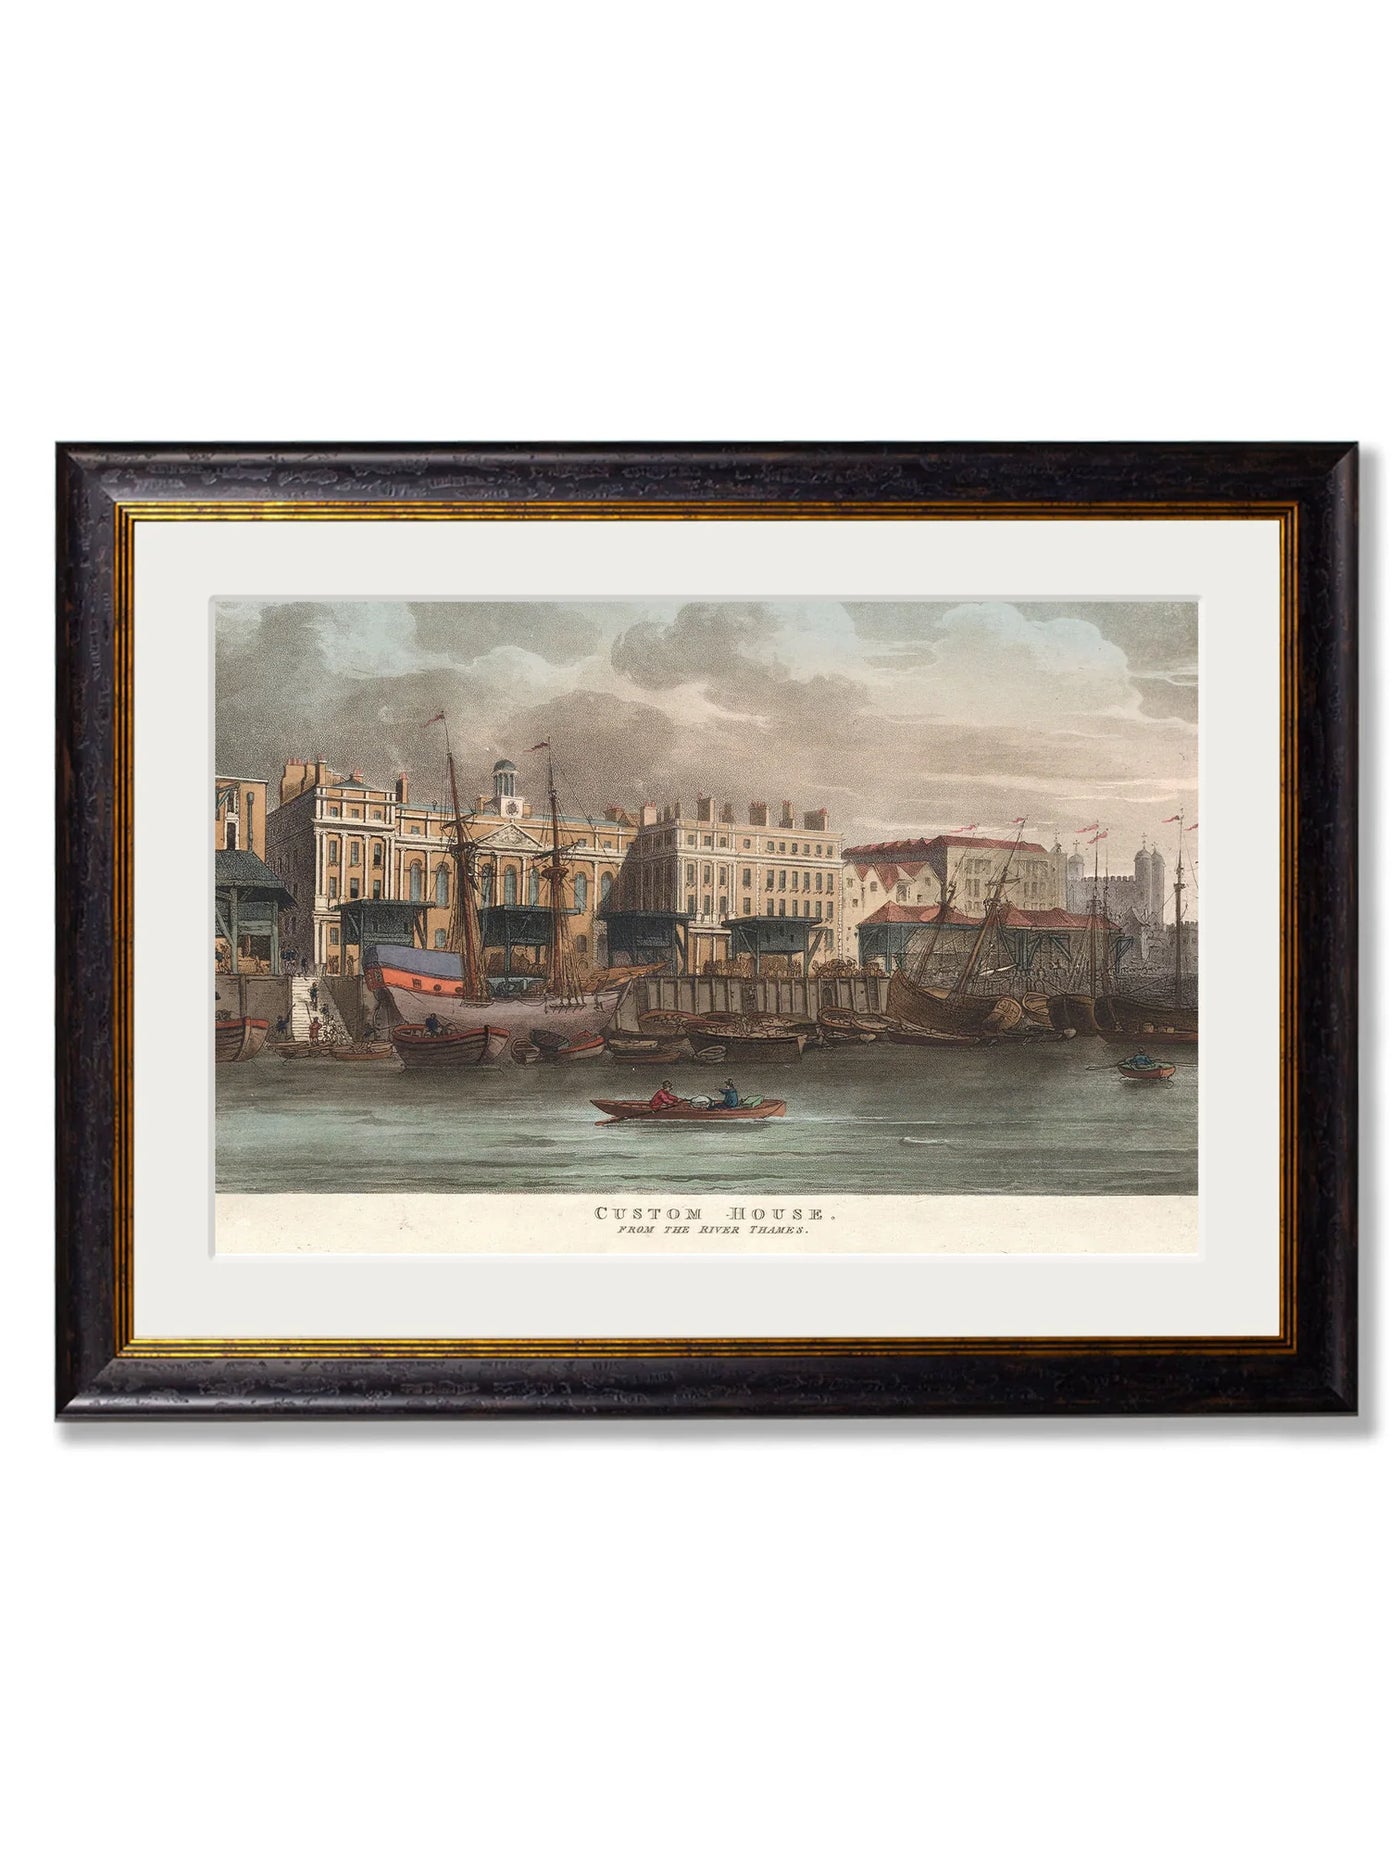 c.1808 Custom House from the River Thames - TheArtistsQuarter